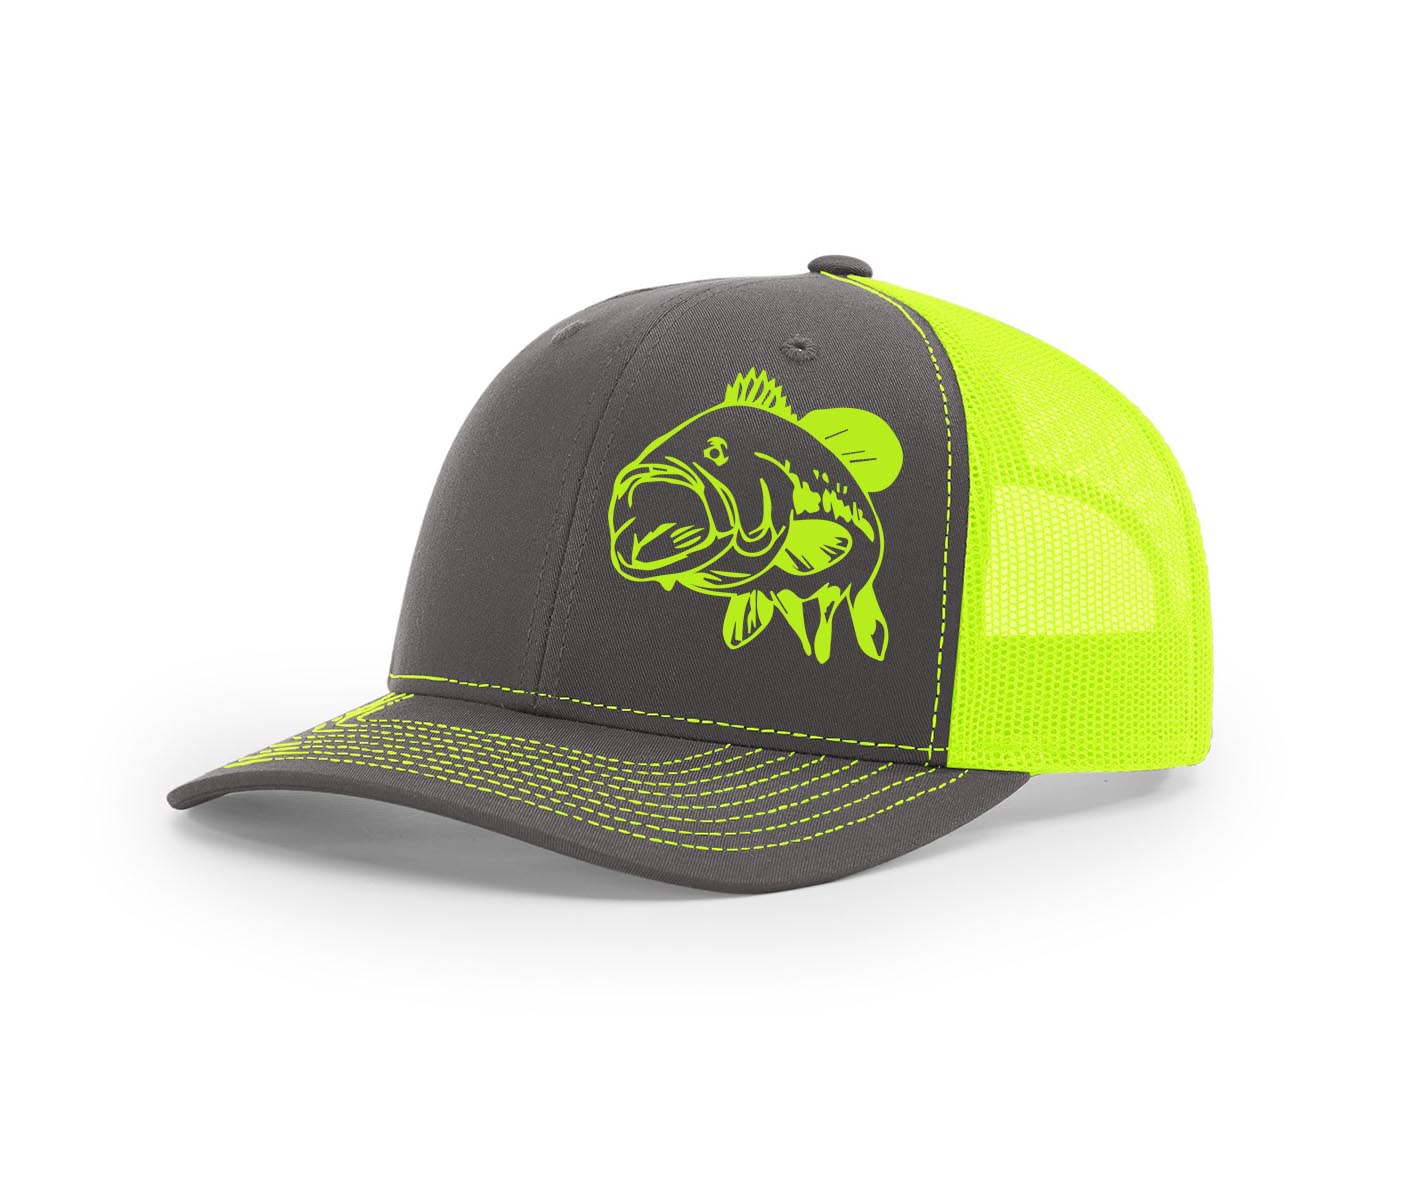 Bass Swamp Cracker Trucker Snapback Hat, Charcoal/Neon Yellow